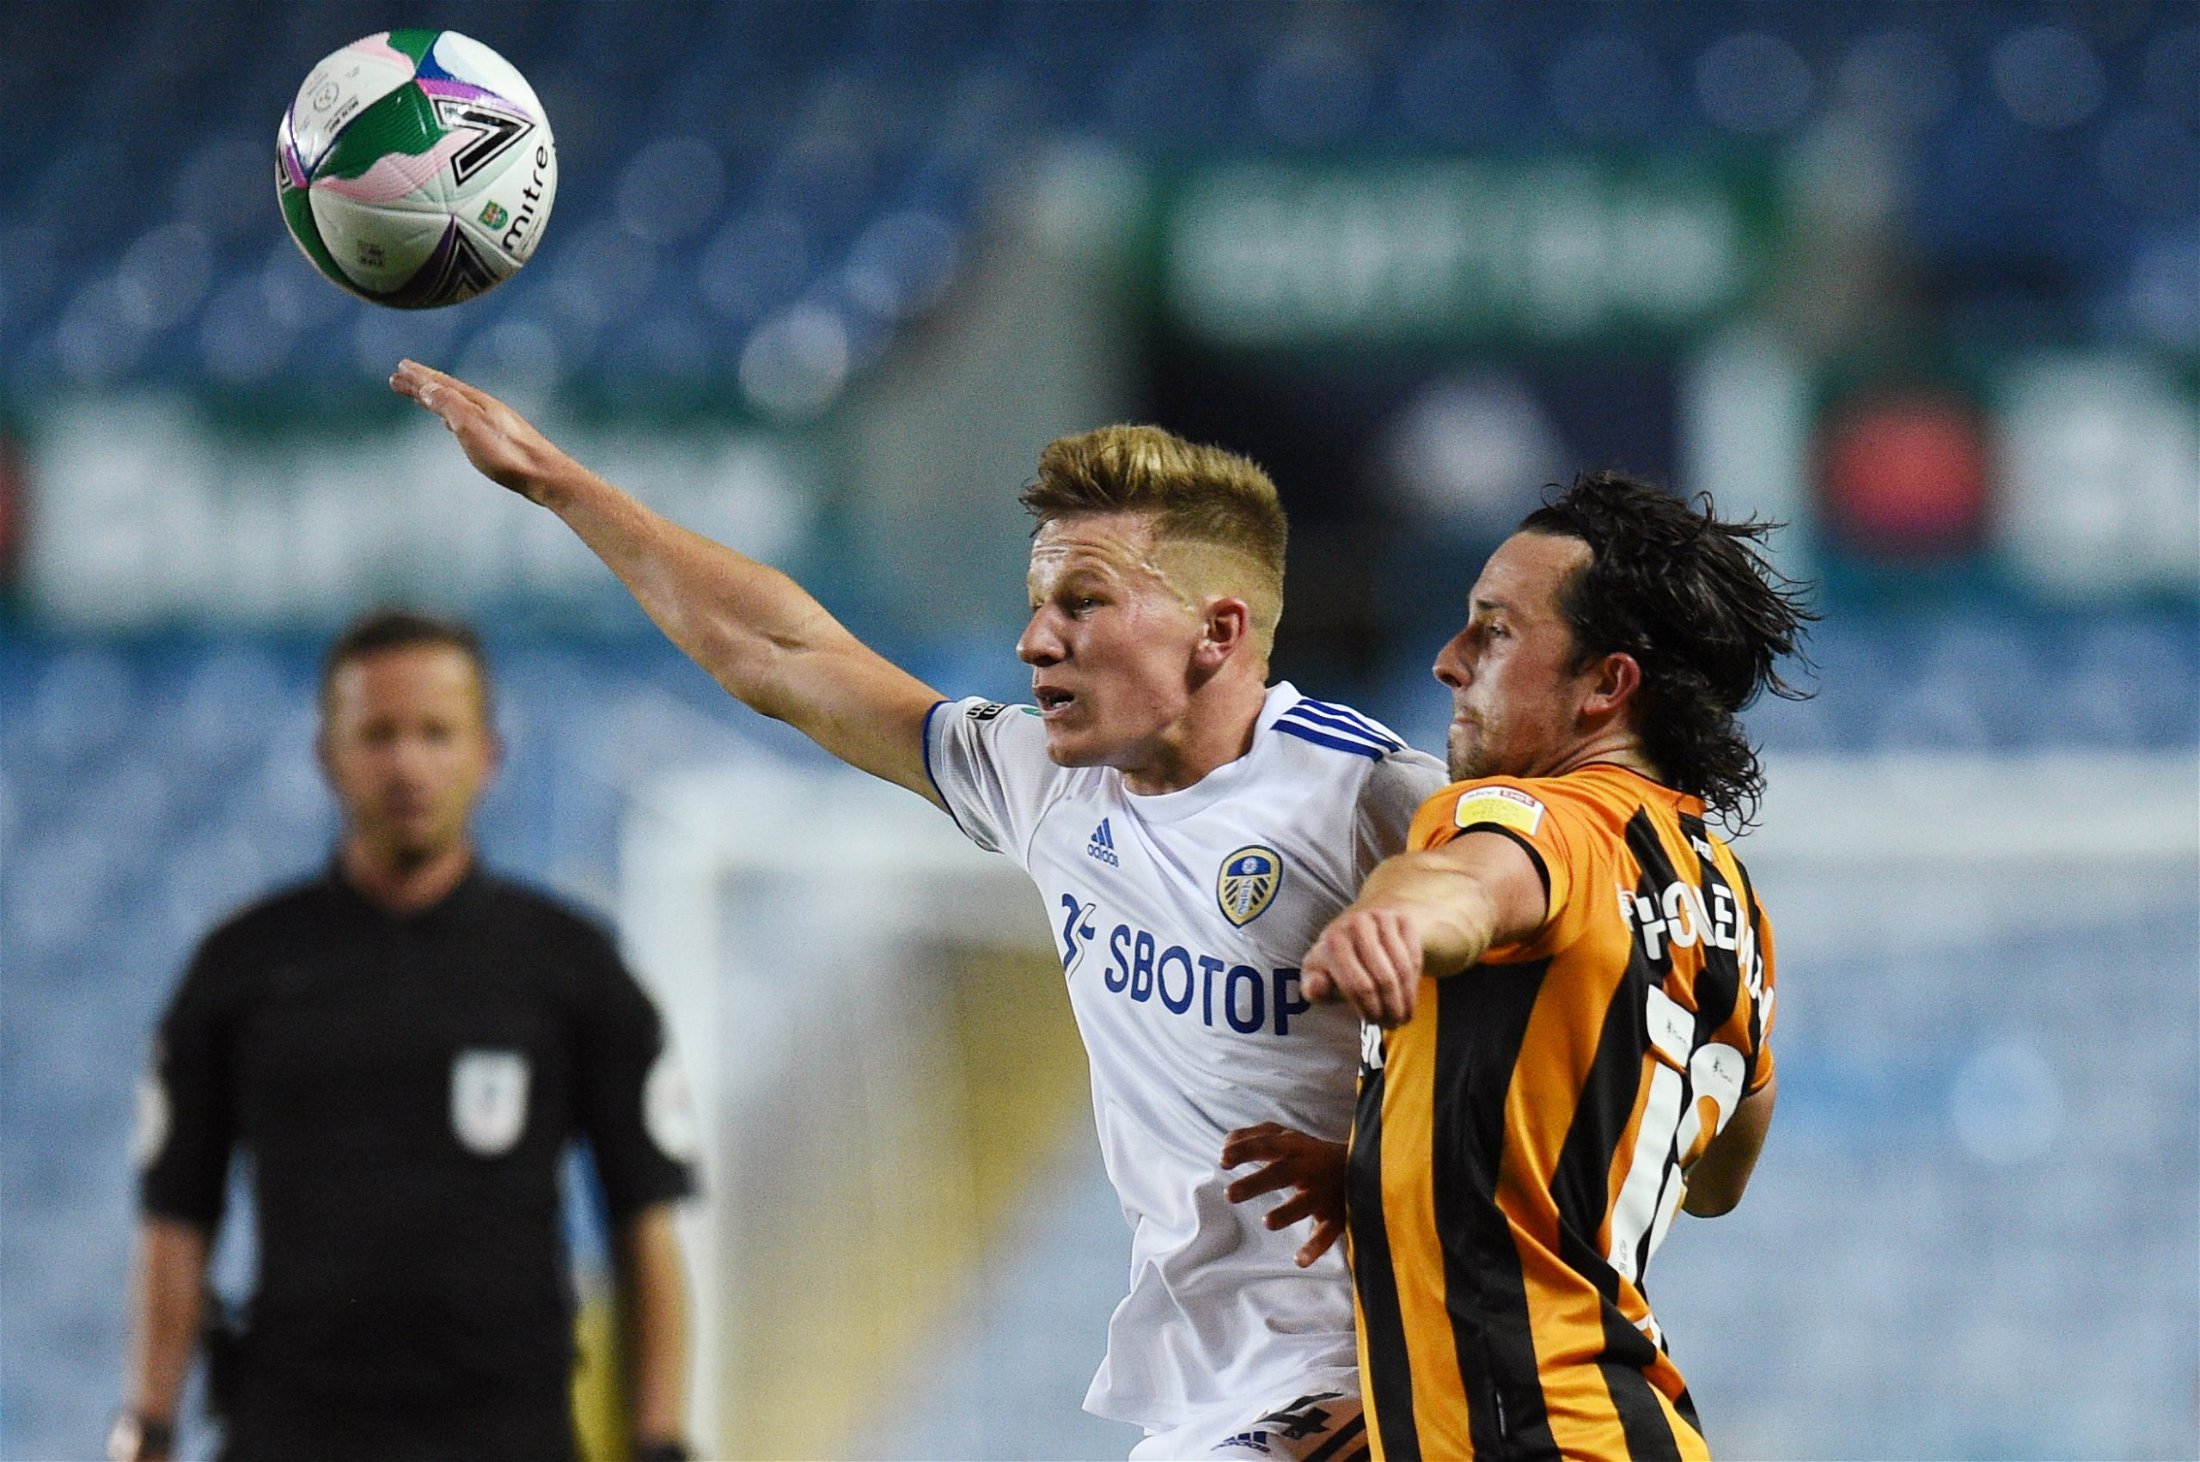  Leeds United player receives touching tribute following season-ending injury